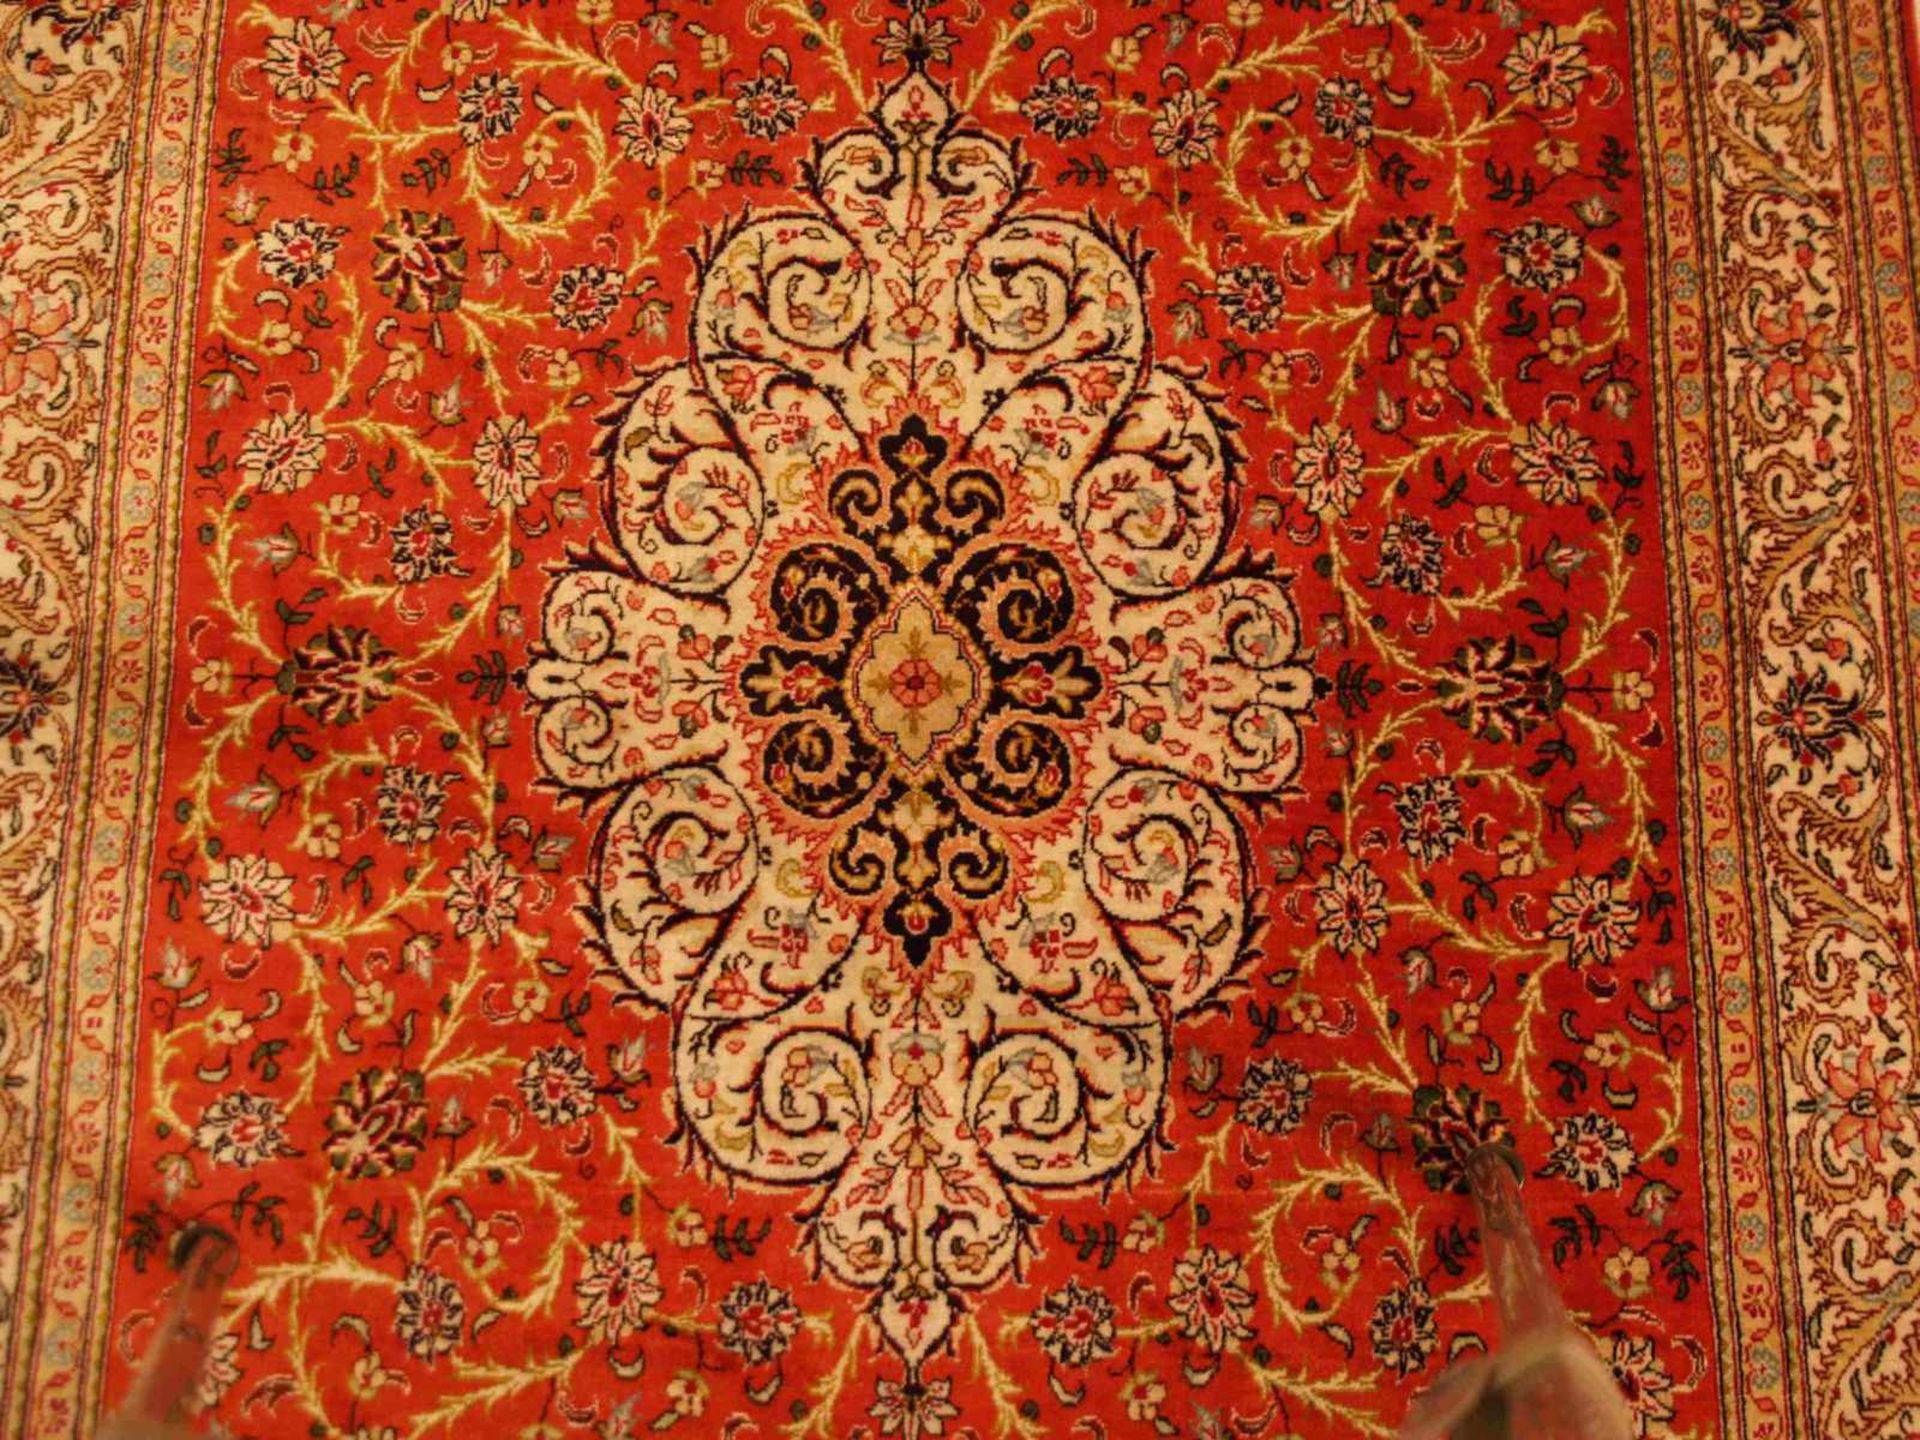 Ghom - Wolle,handgeknüpft,florales Muster,rotgrundig,ca.160x90cm,Orig.Zerti fikat anbei Ghom - Wool, - Bild 3 aus 5